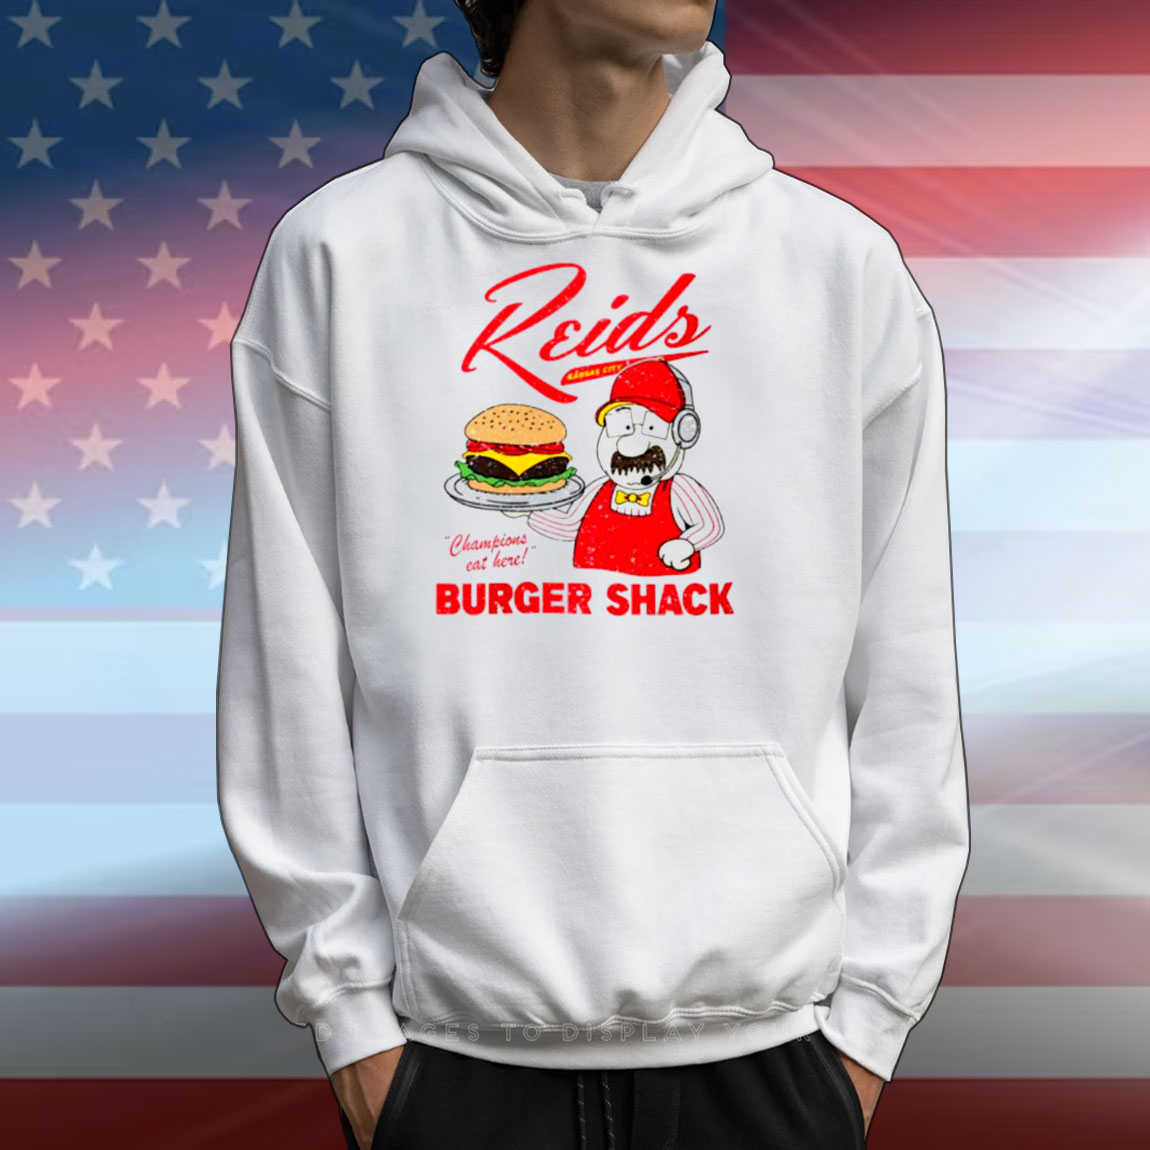 Champions Eat Here Keids Burger Shack T-Shirts